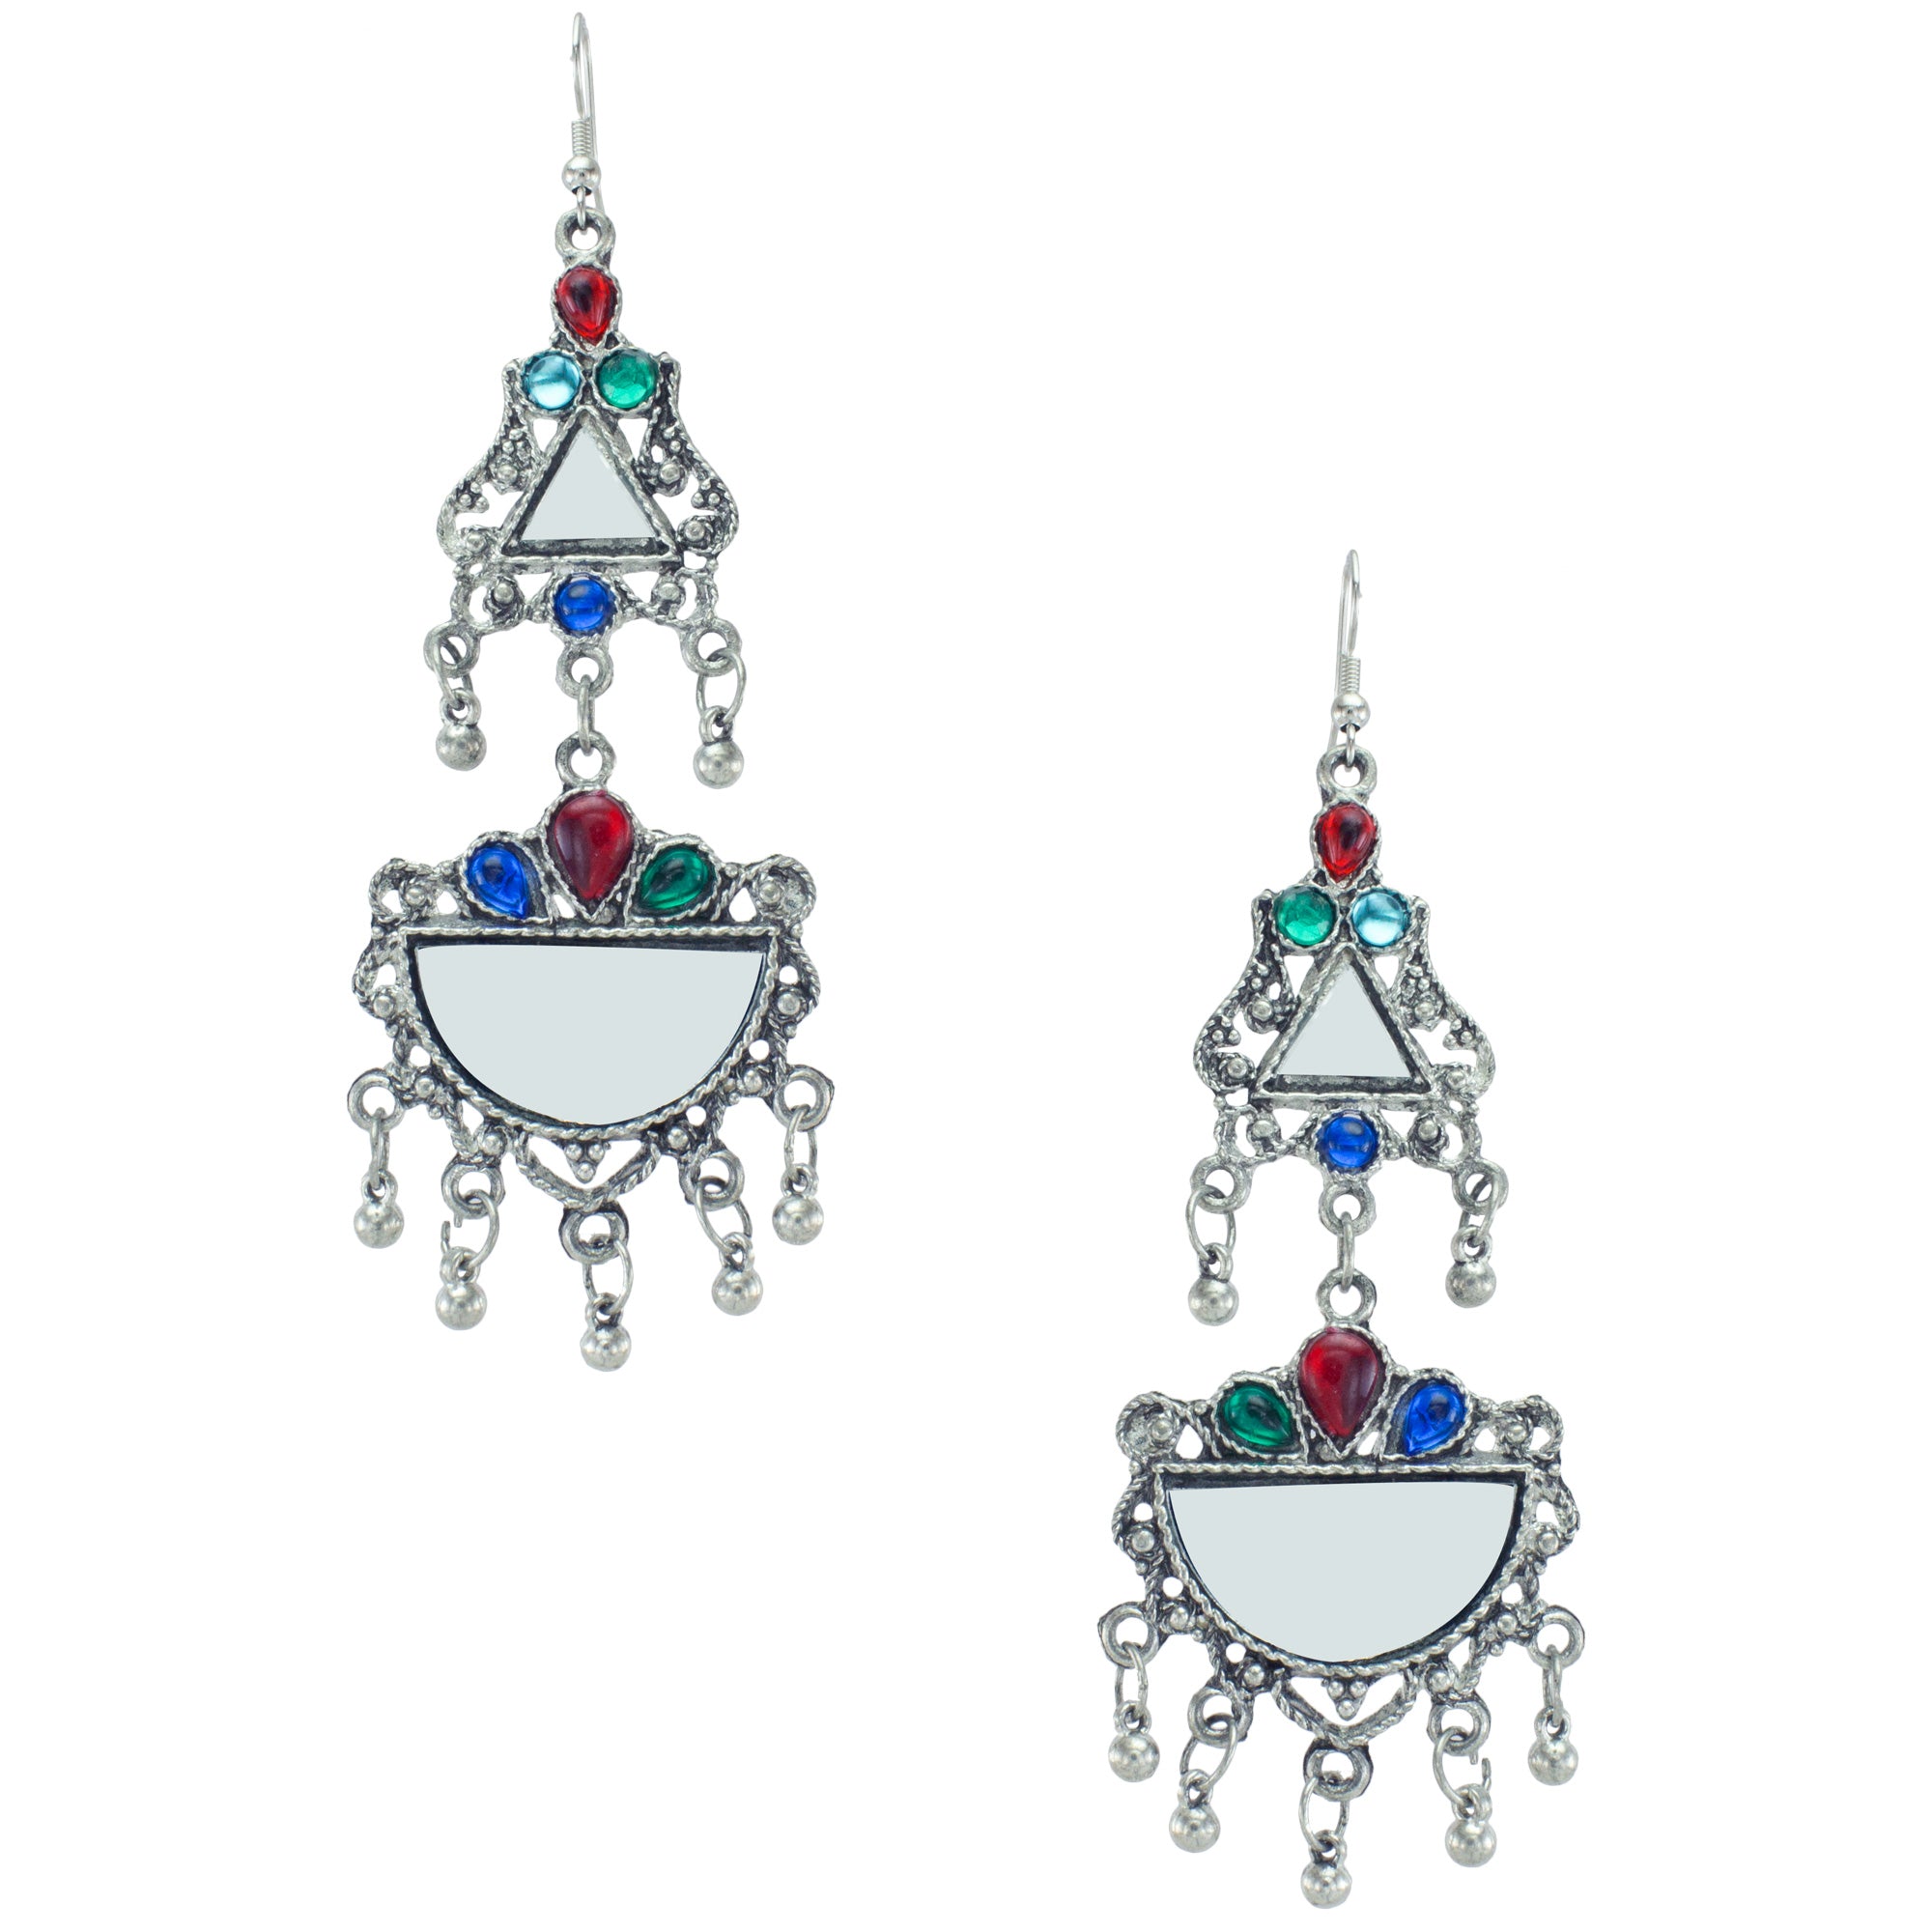 Abhinn Afghani Silver Oxidised Mirror With Stones Dangler Earrings for Women